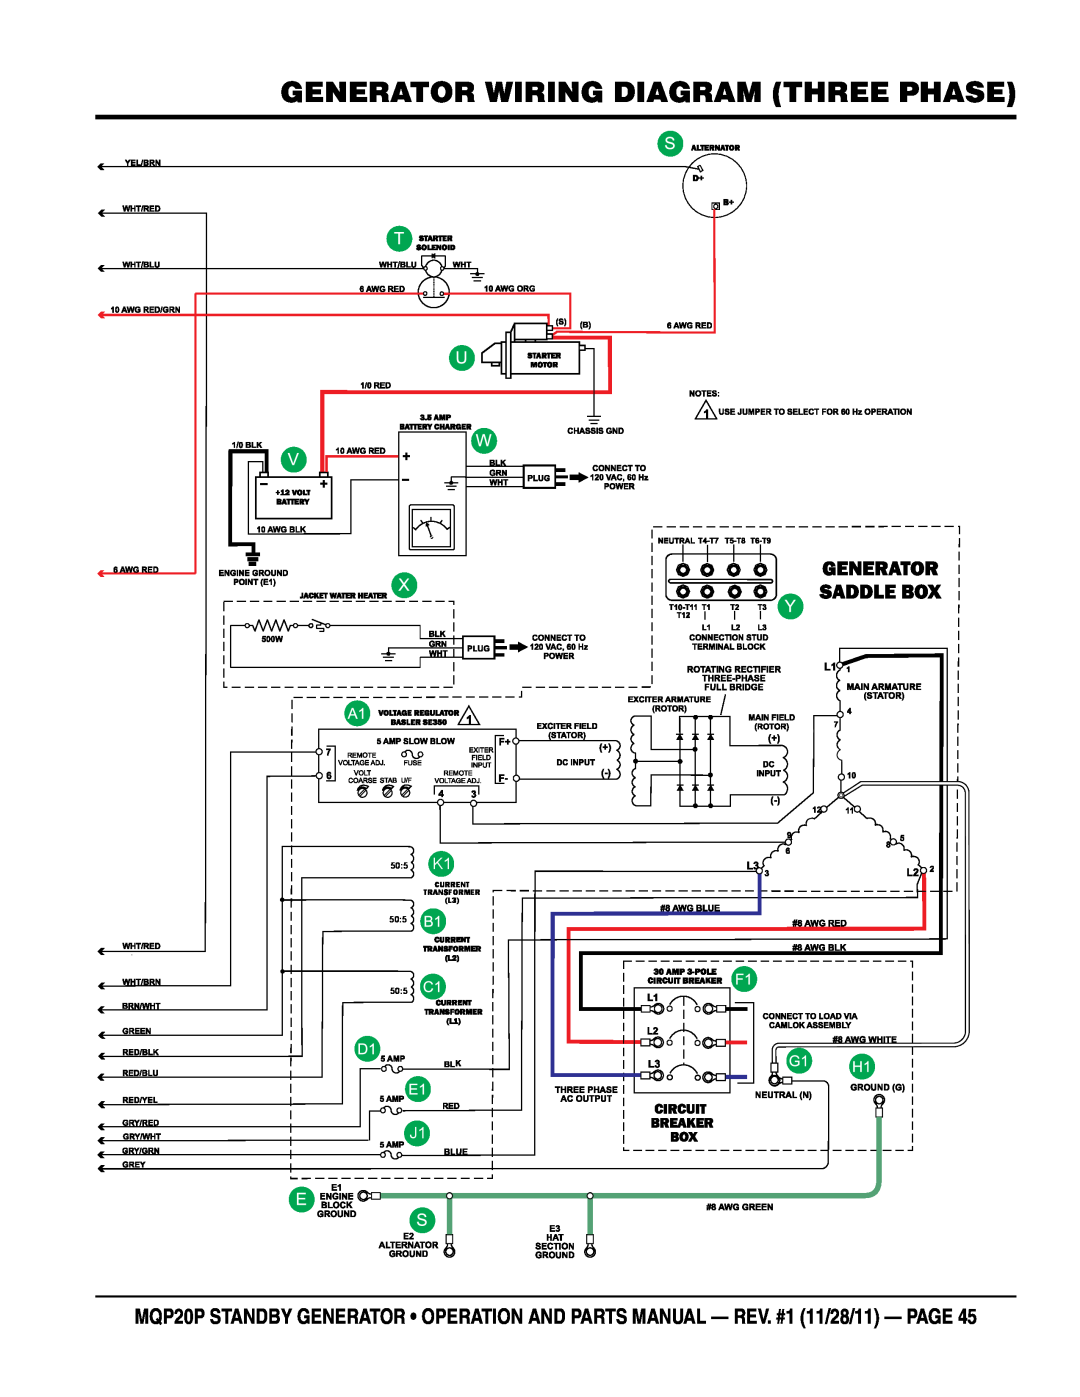 Multiquip MQP20P manual generator Wiring Diagram three phase, 505 K1, 505 505 